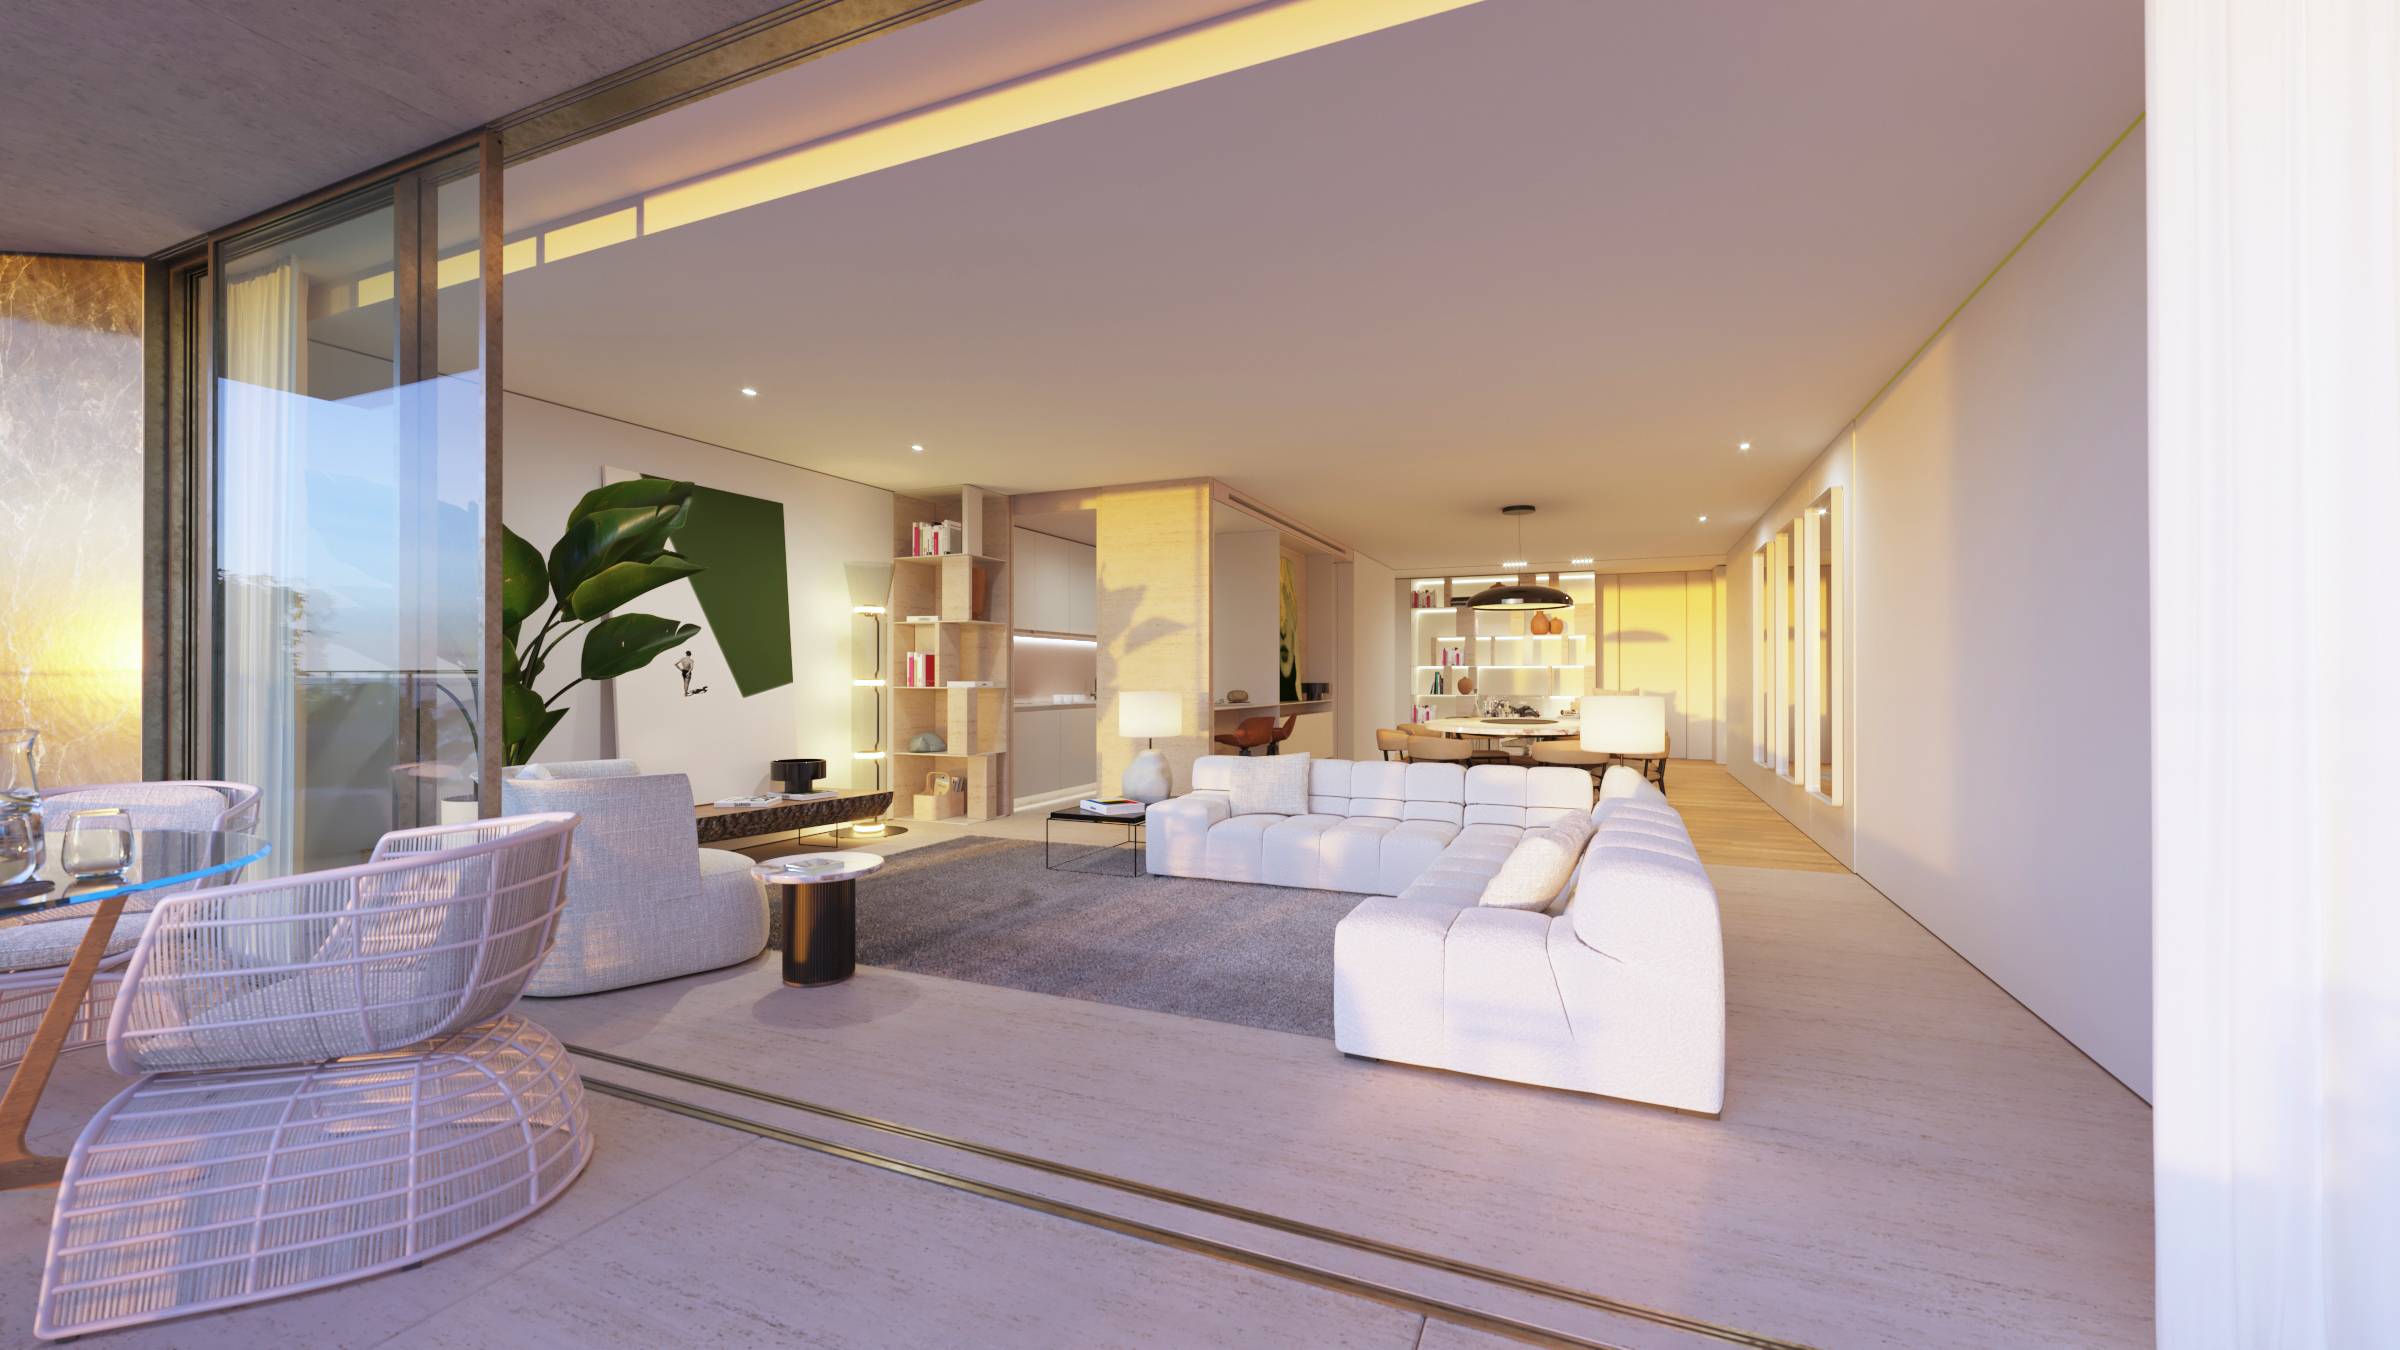 Savoy Monunmentalis - Luxury T4 apartments- Funchal - Madeira Island